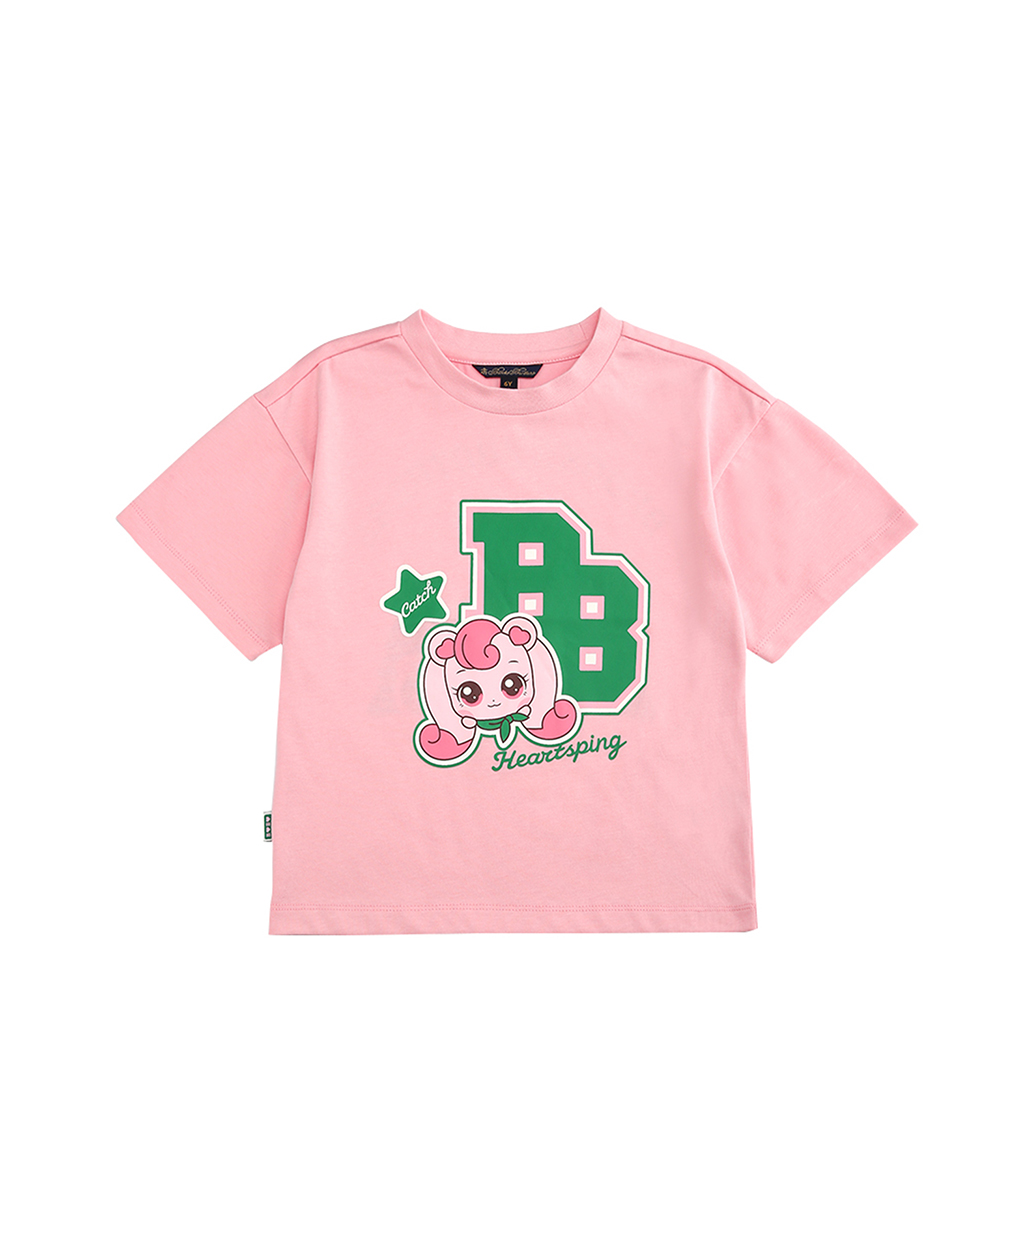 [Catch! Teenieping] BB 빅 로고 티셔츠 (핑크)